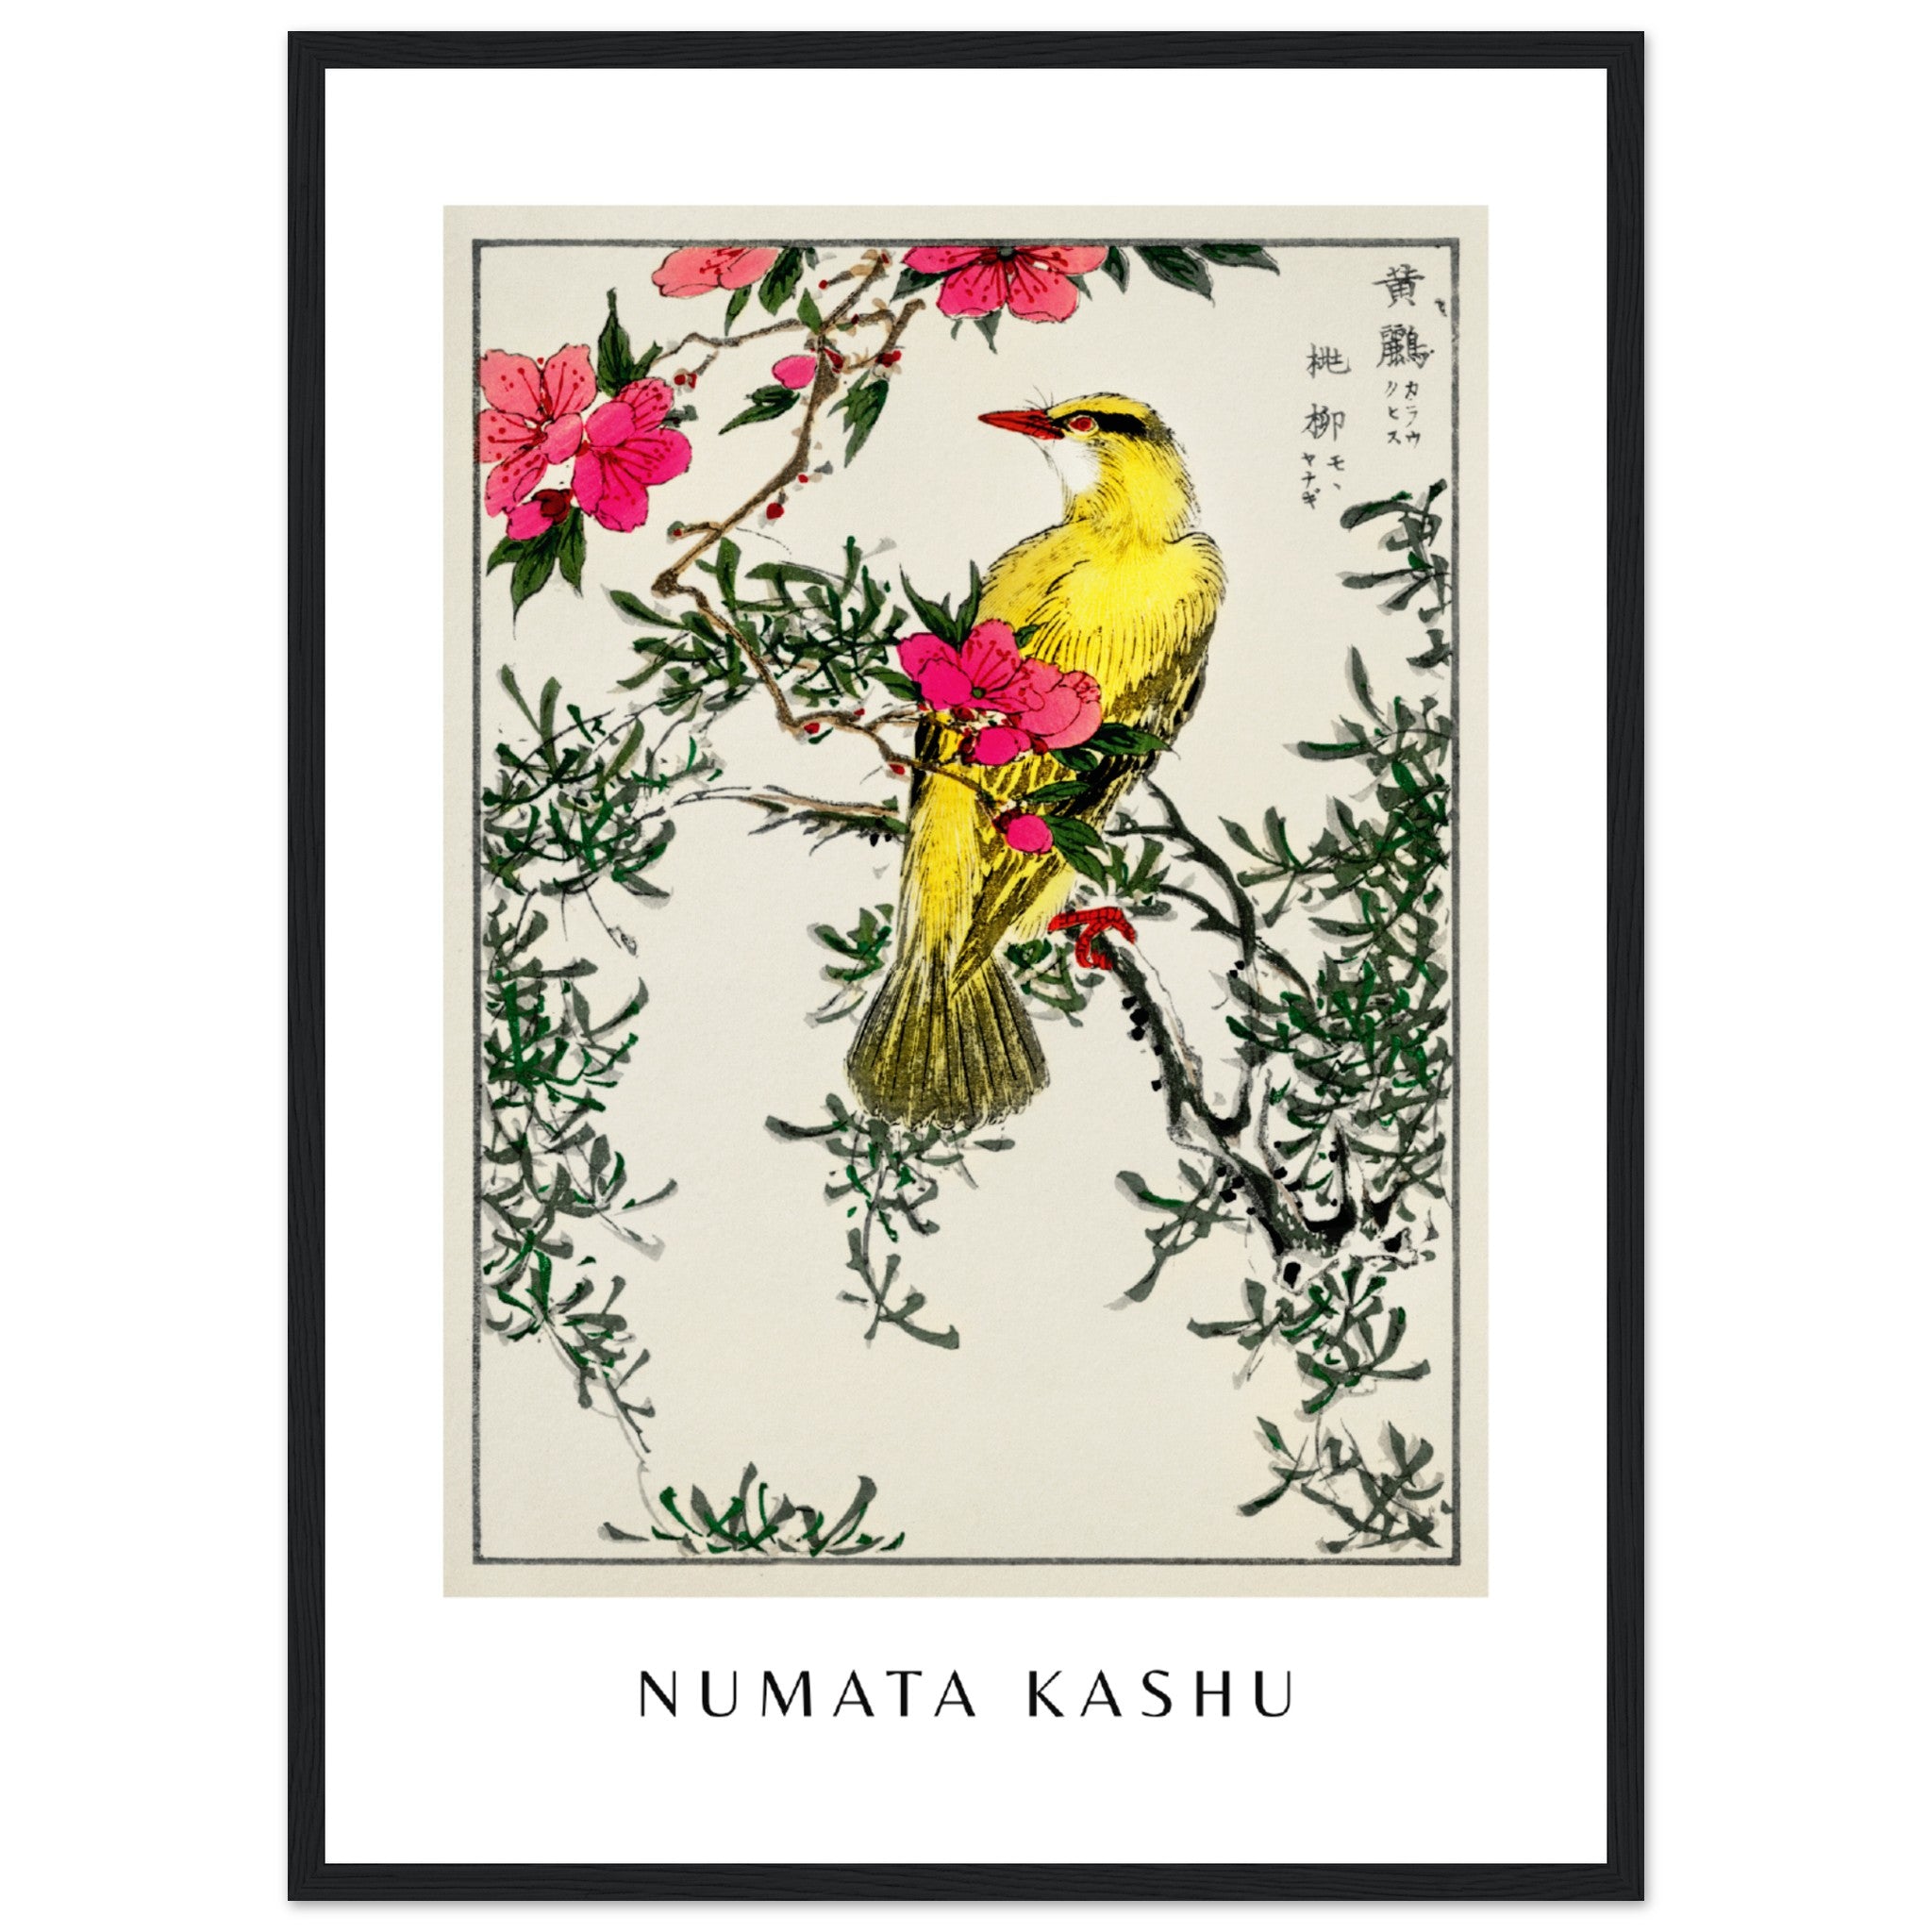 Numata Kashu Print 4 Poster